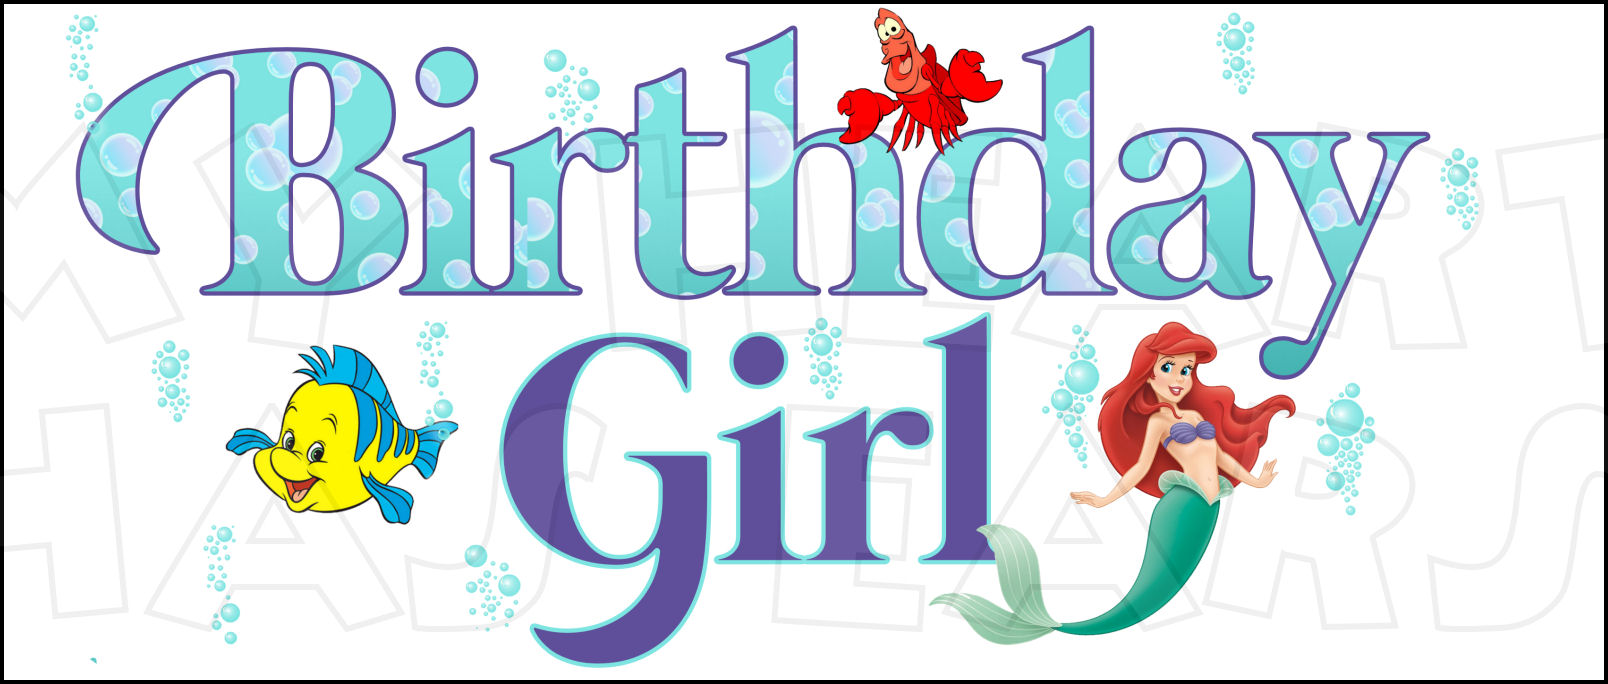 Little mermaid birthday.